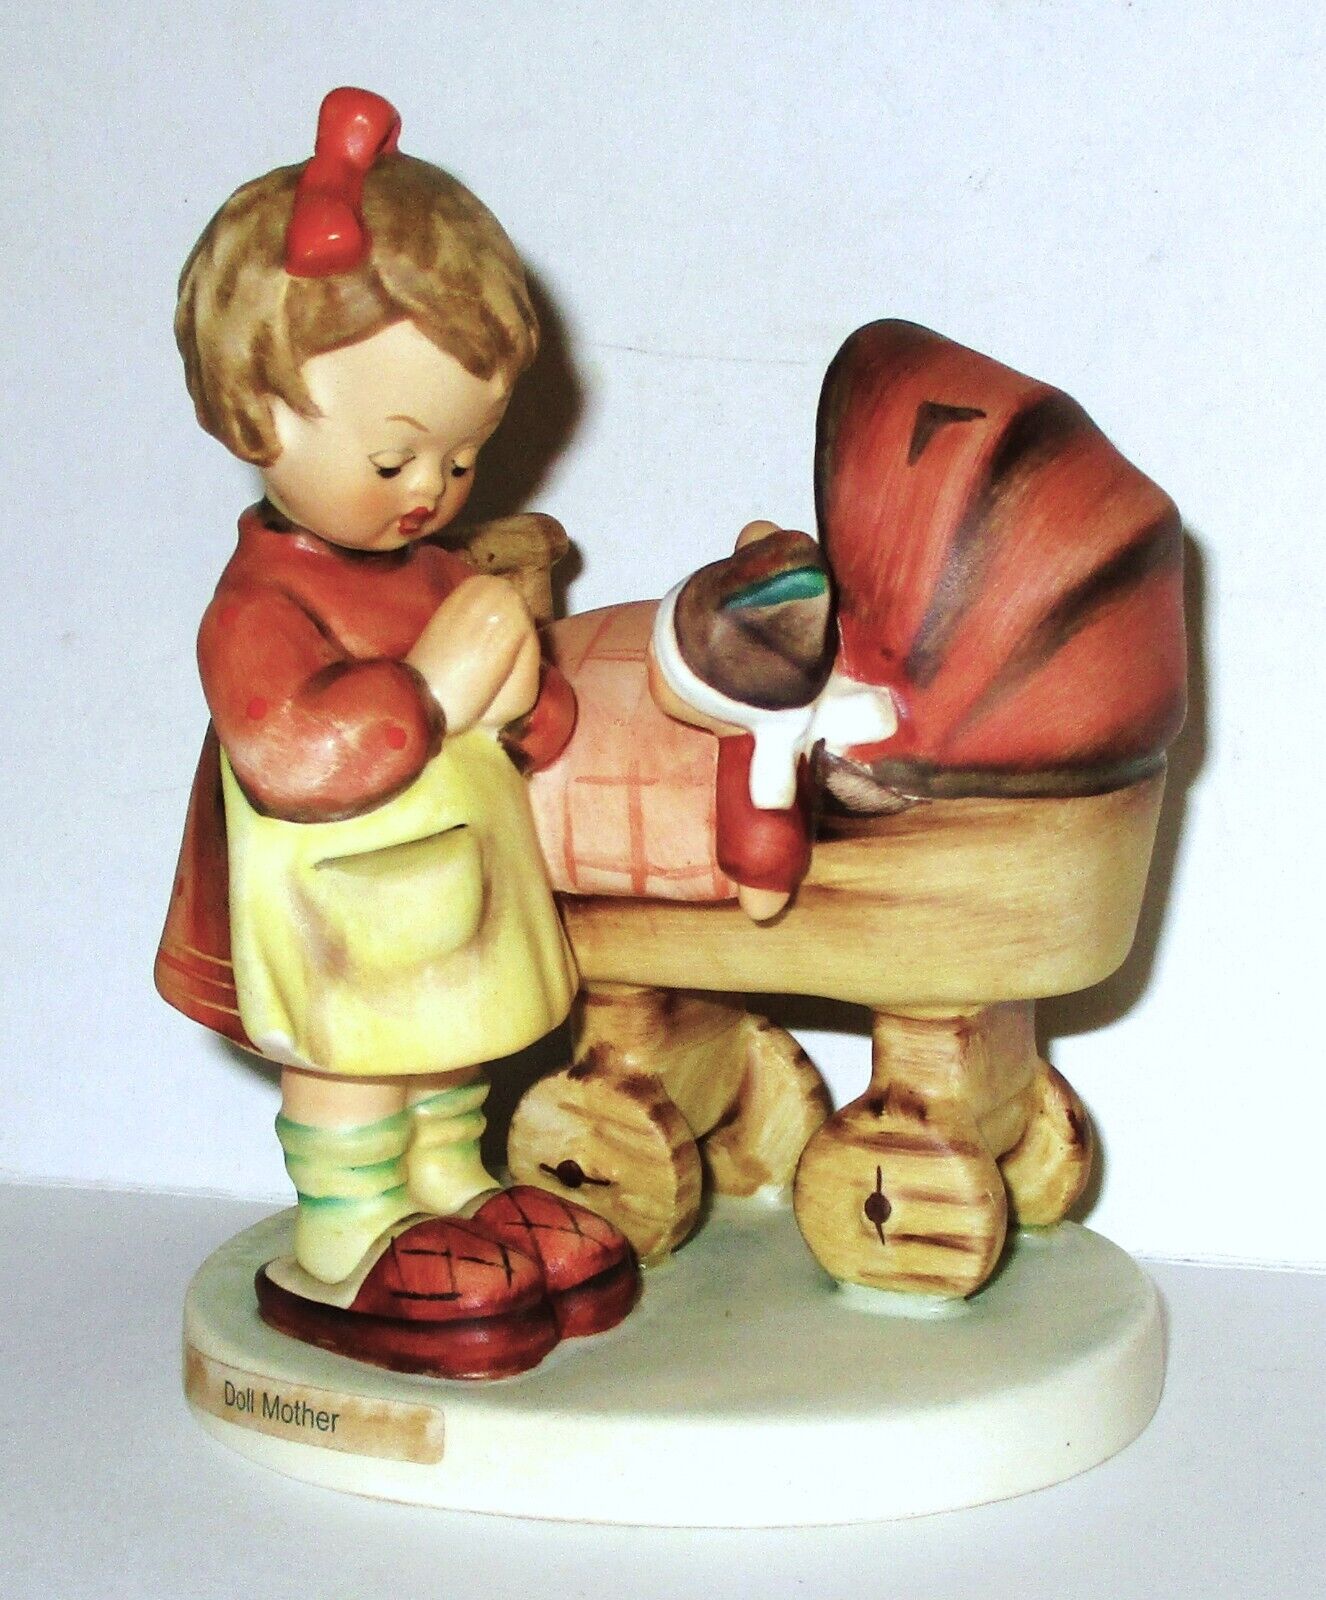 Vintage Hummel Goebel Figurine Doll Mother #67 West Germany Great Condition